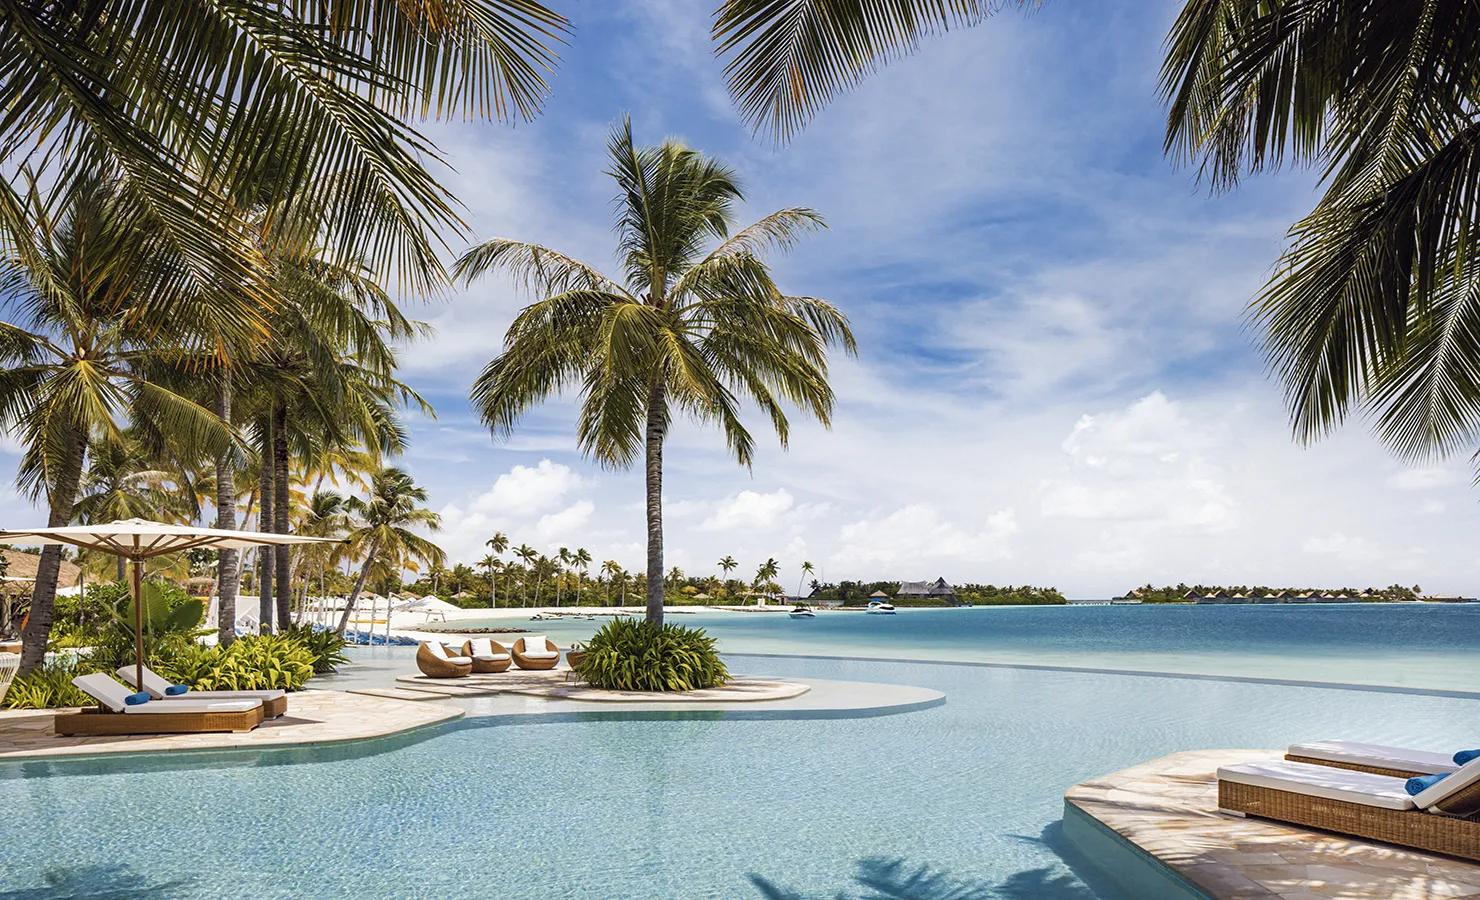 Perfect Hideaways, Waldorf Maldives, Luxury accommodation, beach, palmtrees and ocean